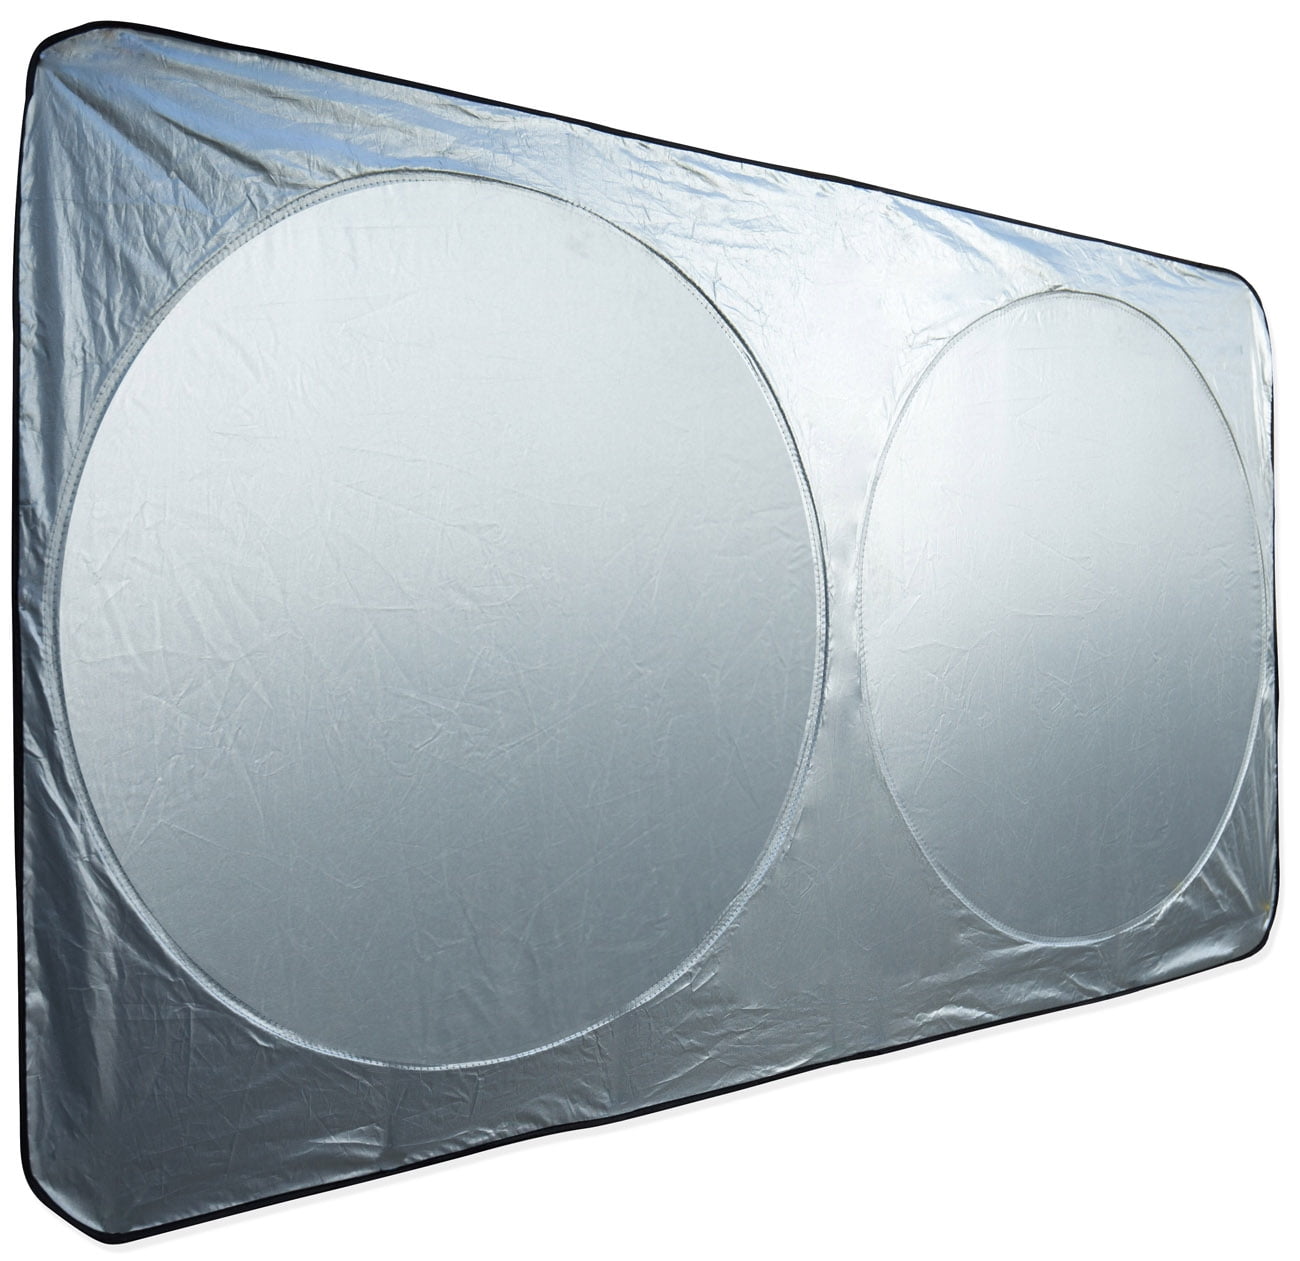 windshield reflector heat shield review